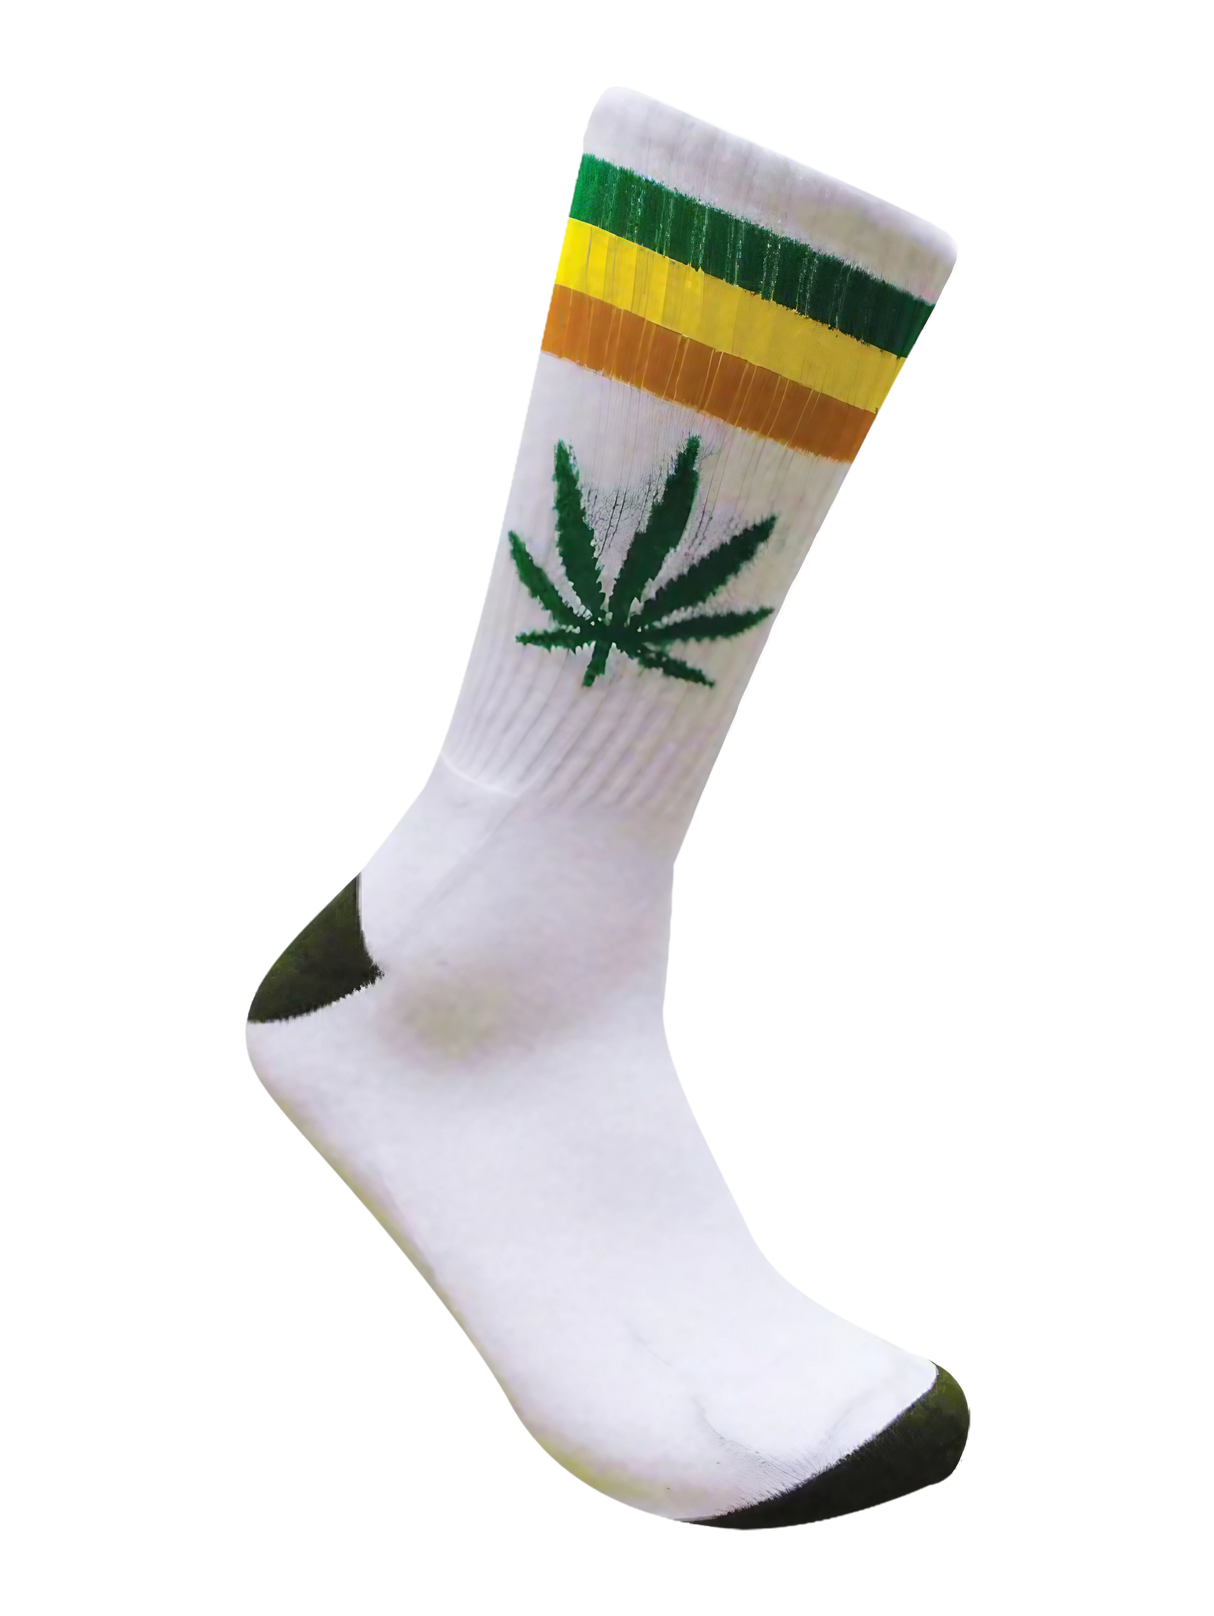 Leaf Republic Weed Socks with Rasta Stripes and Cannabis Leaf Design - Side View